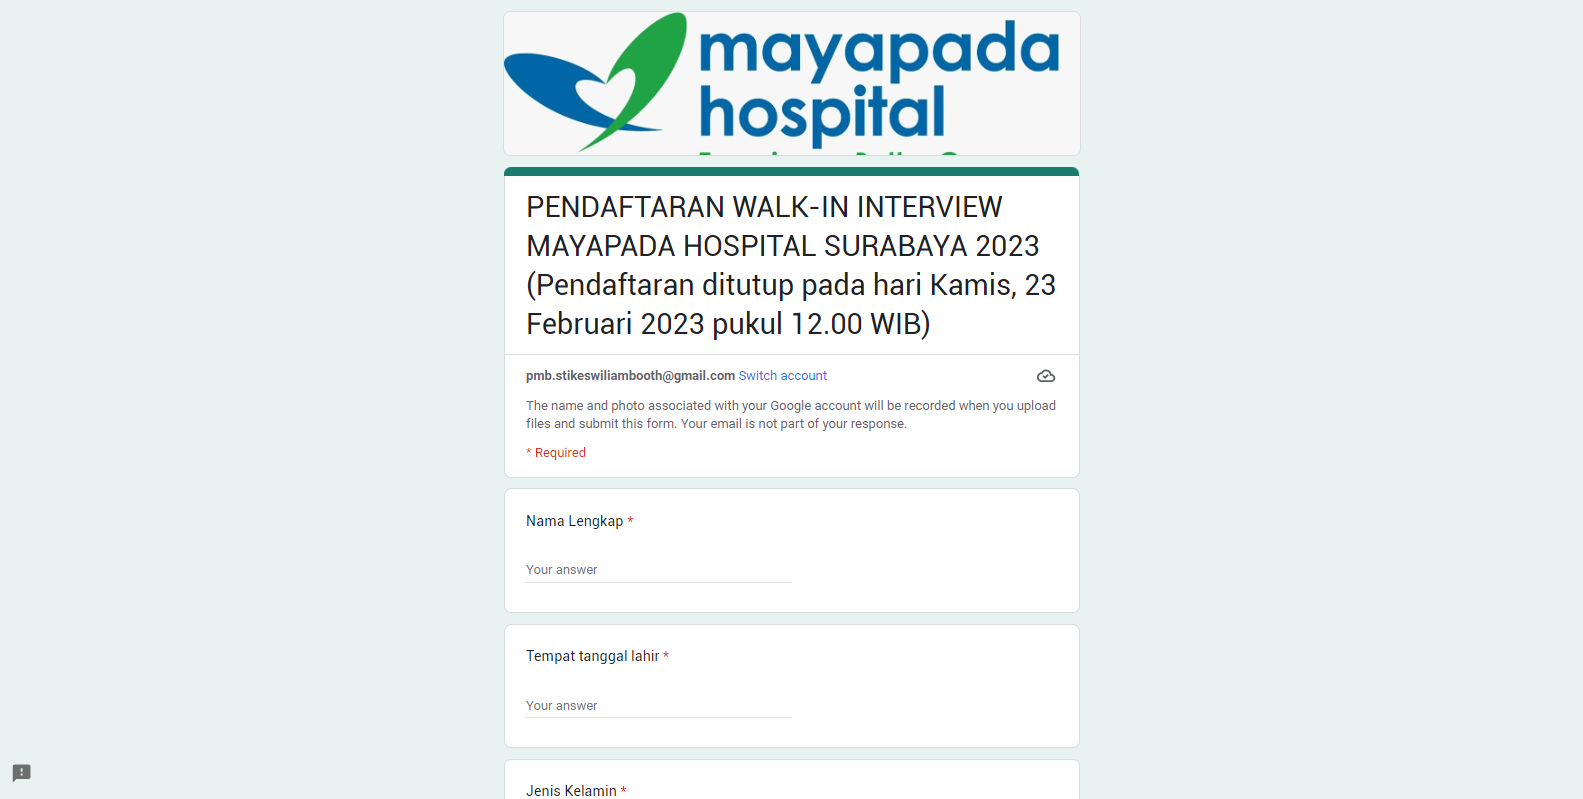 PENDAFTARAN WALK-IN INTERVIEW MAYAPADA HOSPITAL SURABAYA 2023 (Pendaftaran ditutup pada hari Kamis, 23 Februari 2023 pukul 12.00 WIB)